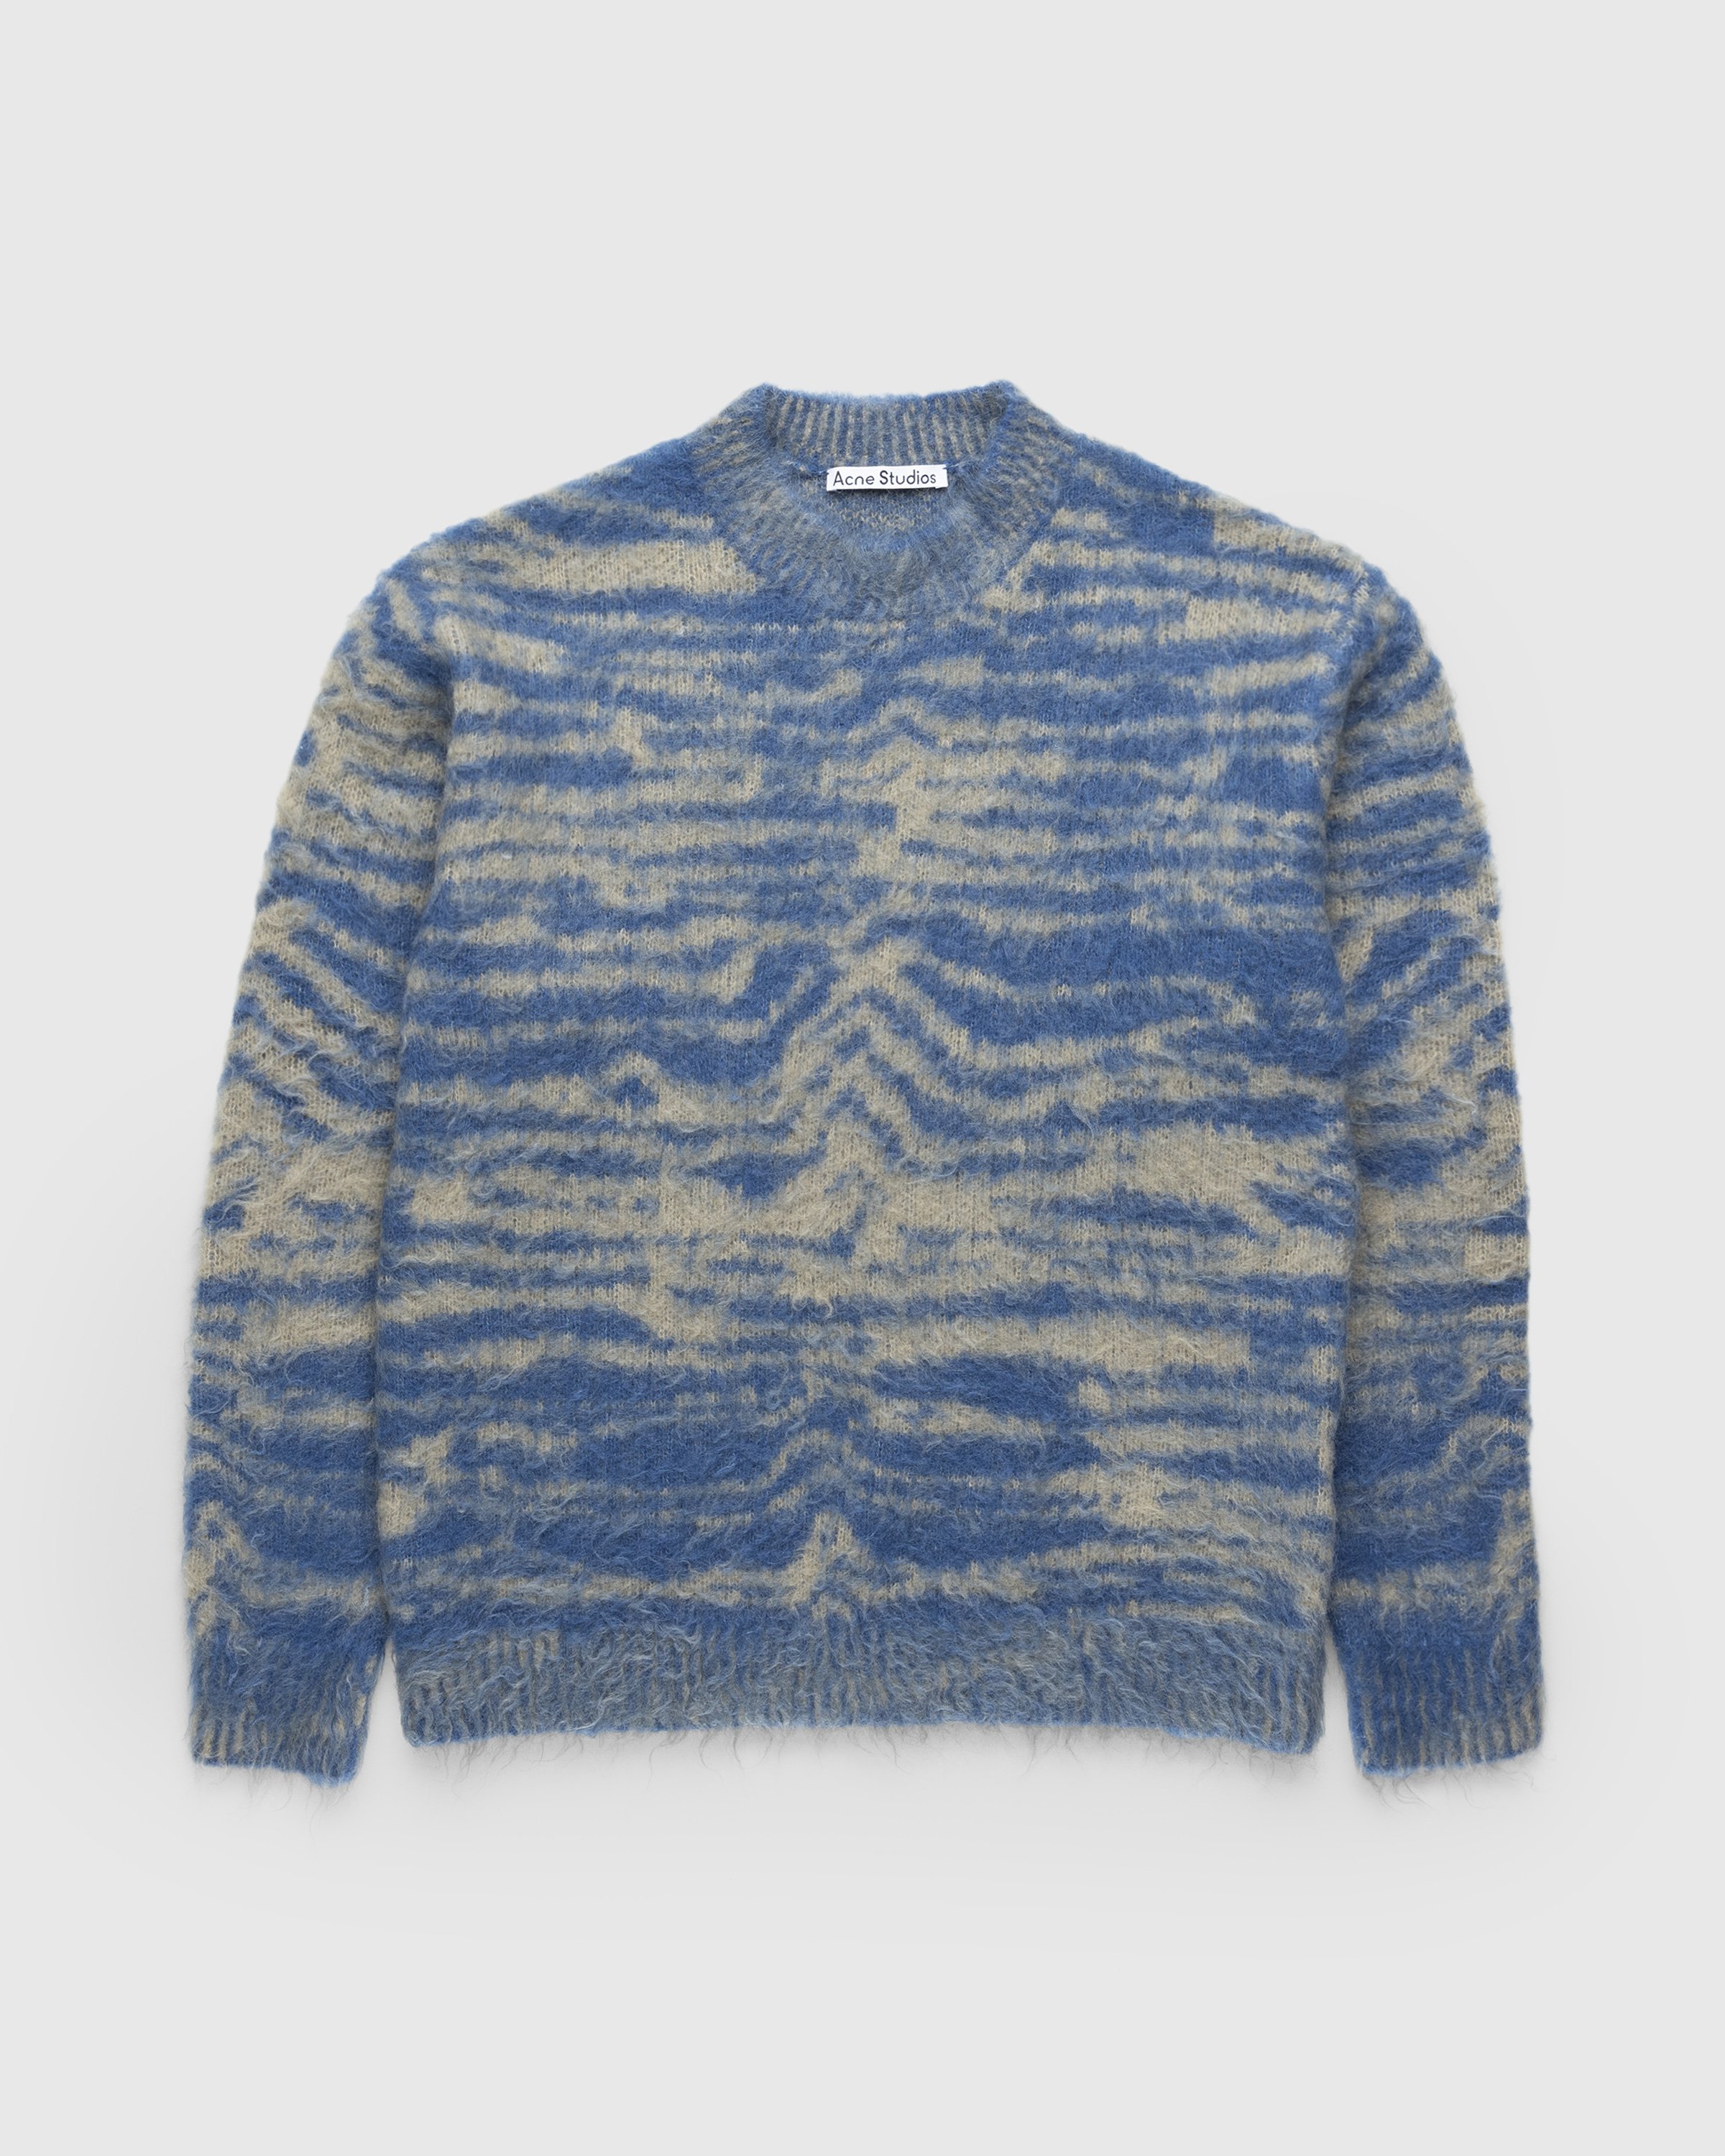 Acne Studios - Jacquard Crewneck Sweater Blue - Clothing - Blue - Image 1